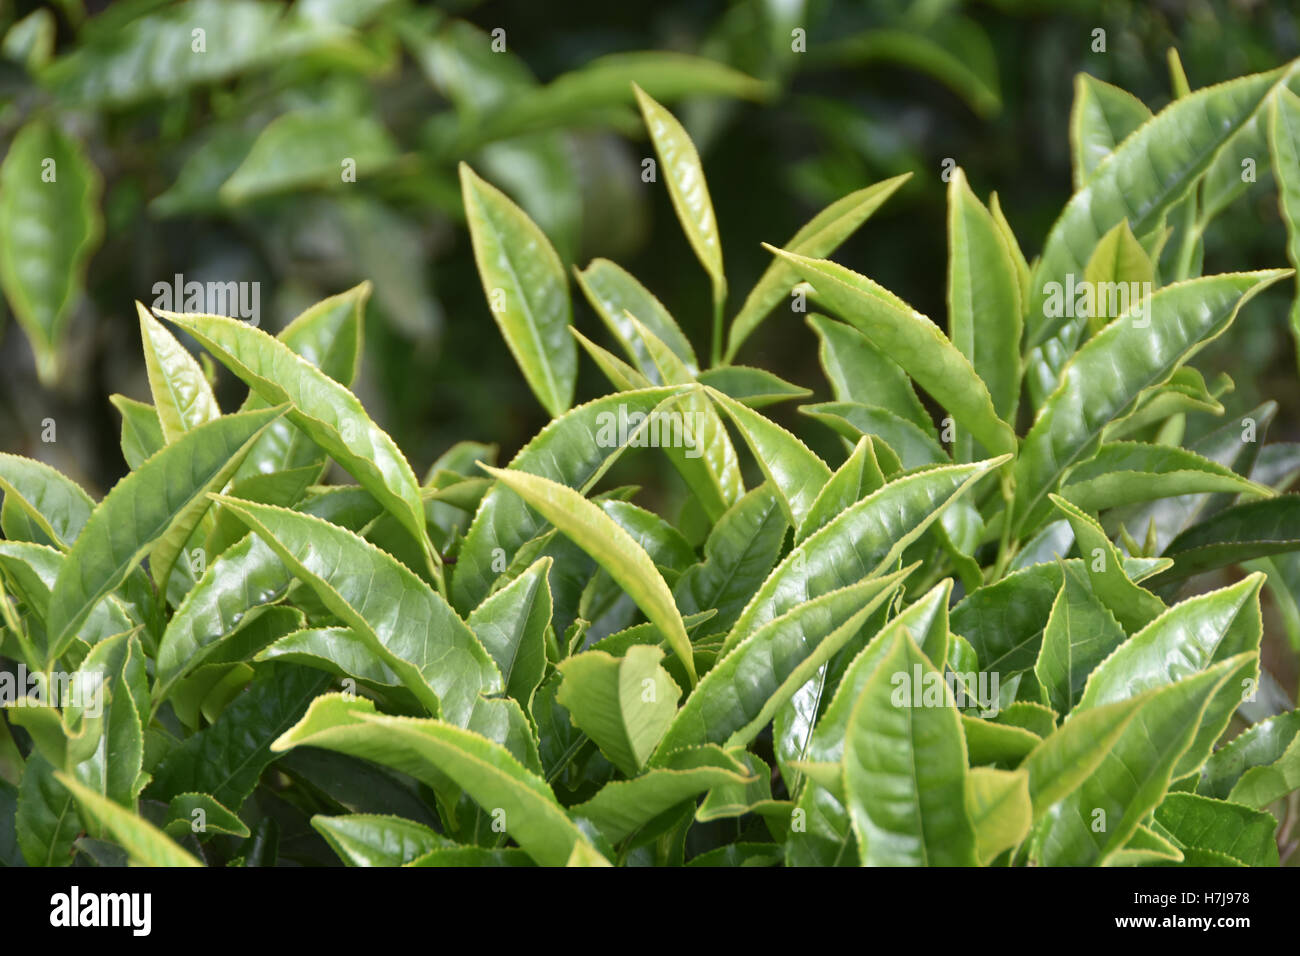 Tea gardens, South India Stock Photo